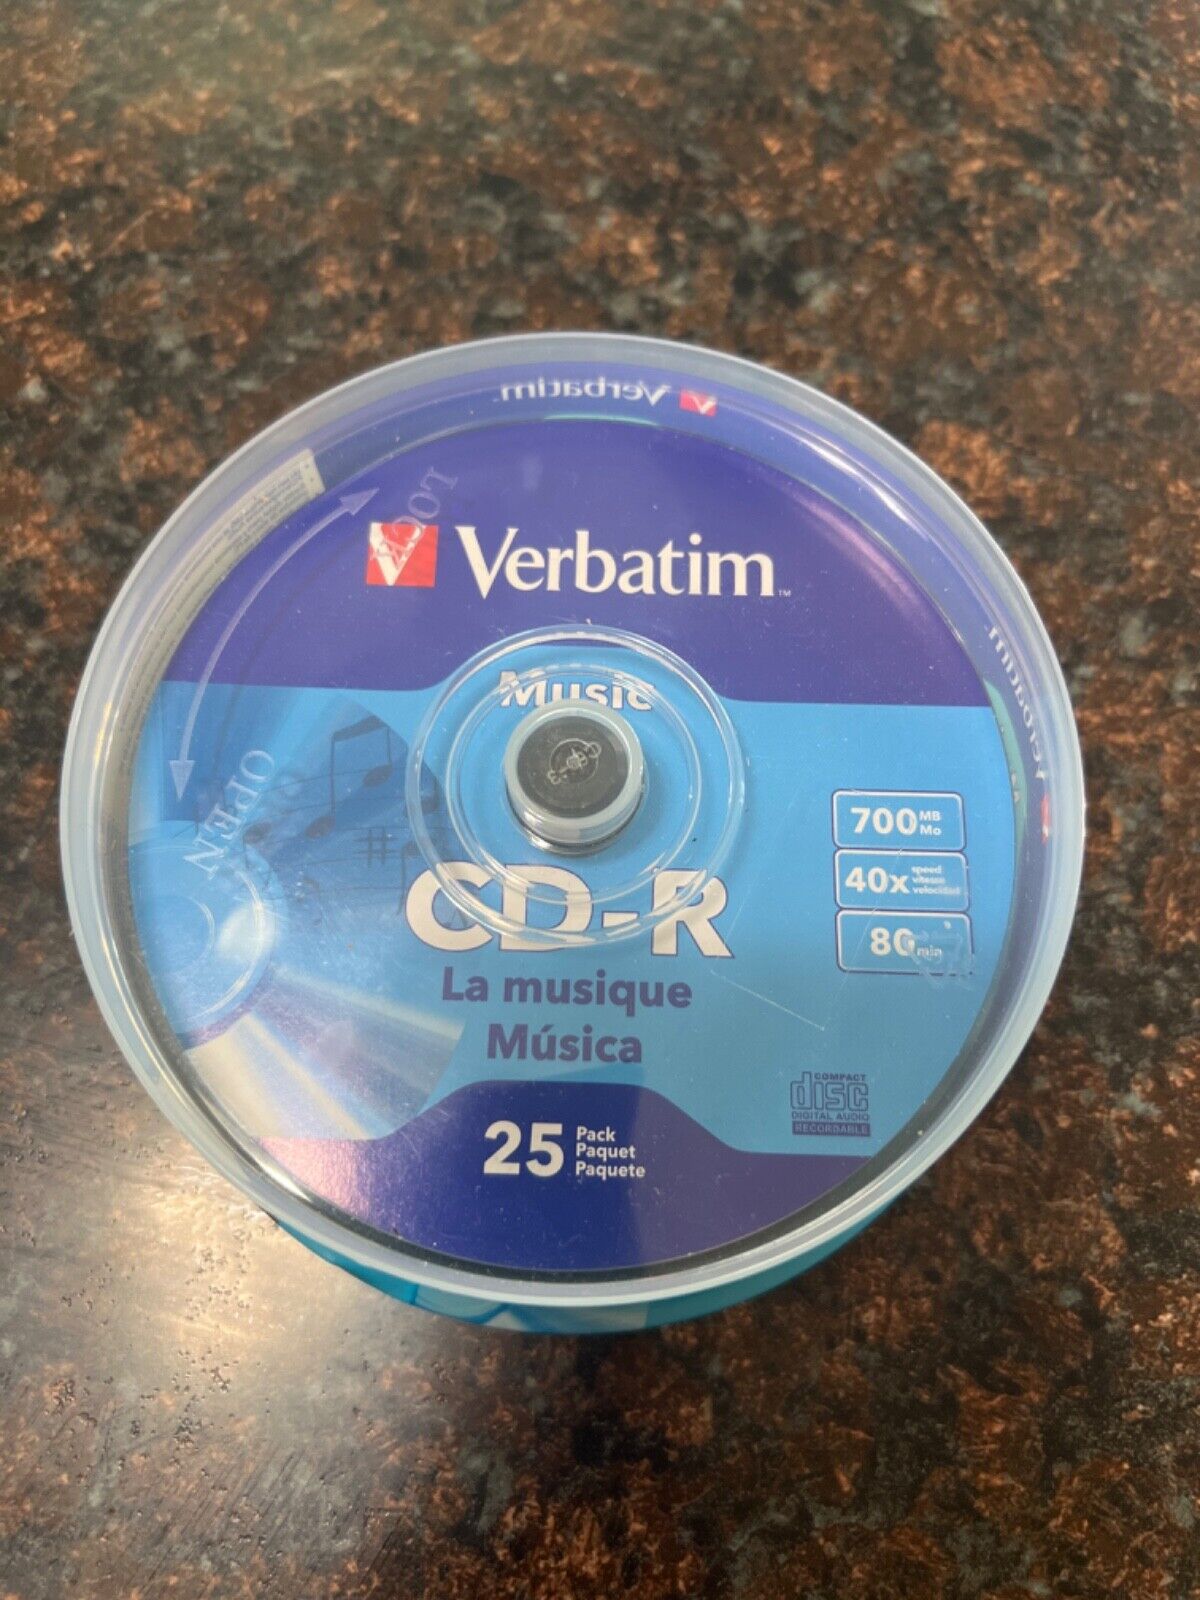 Verbatim Music CD-R 80 Min 40x Speed 700 MB 25 Pack Spindle CD